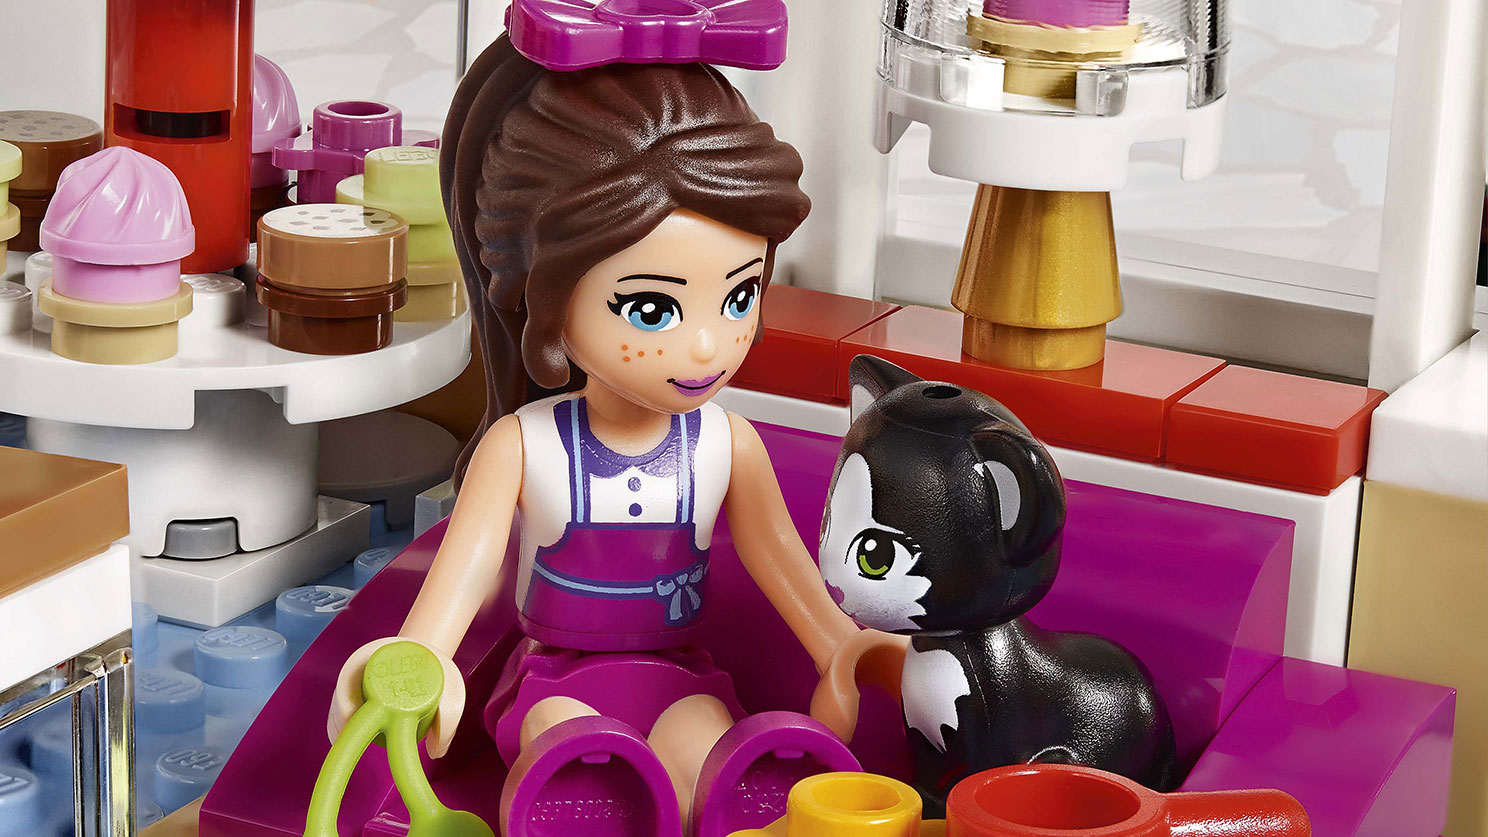 LEGO FRIENDS: Heartlake Cupcake Cafe (41119) -- complete